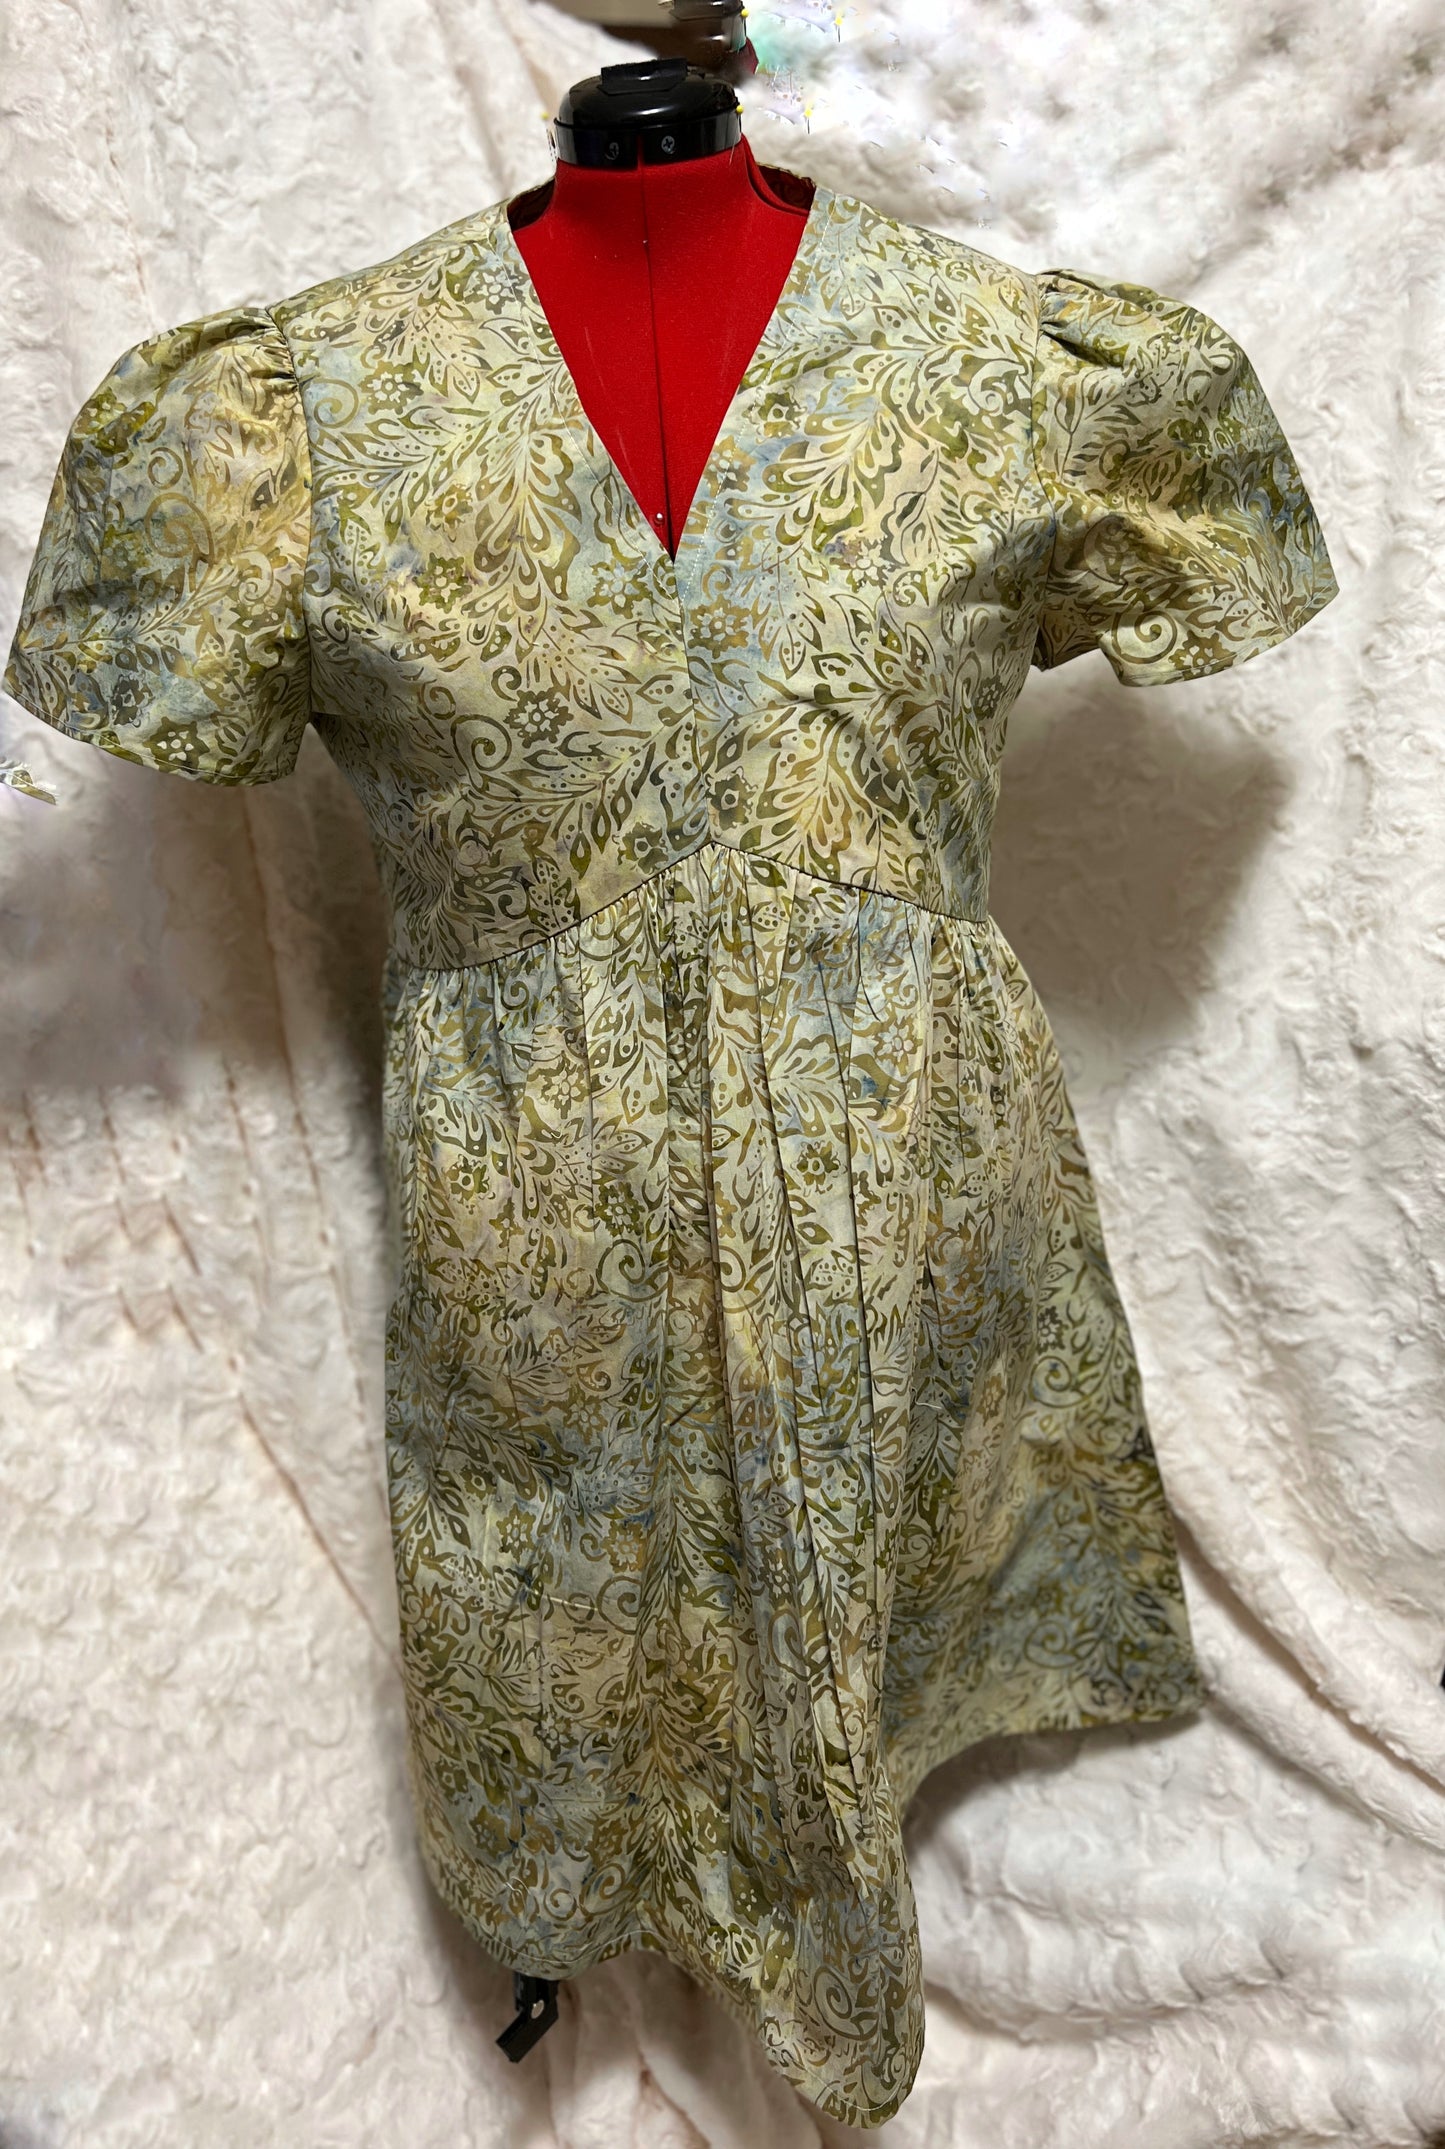 Batik V-neck dress handmade with French appliqué.